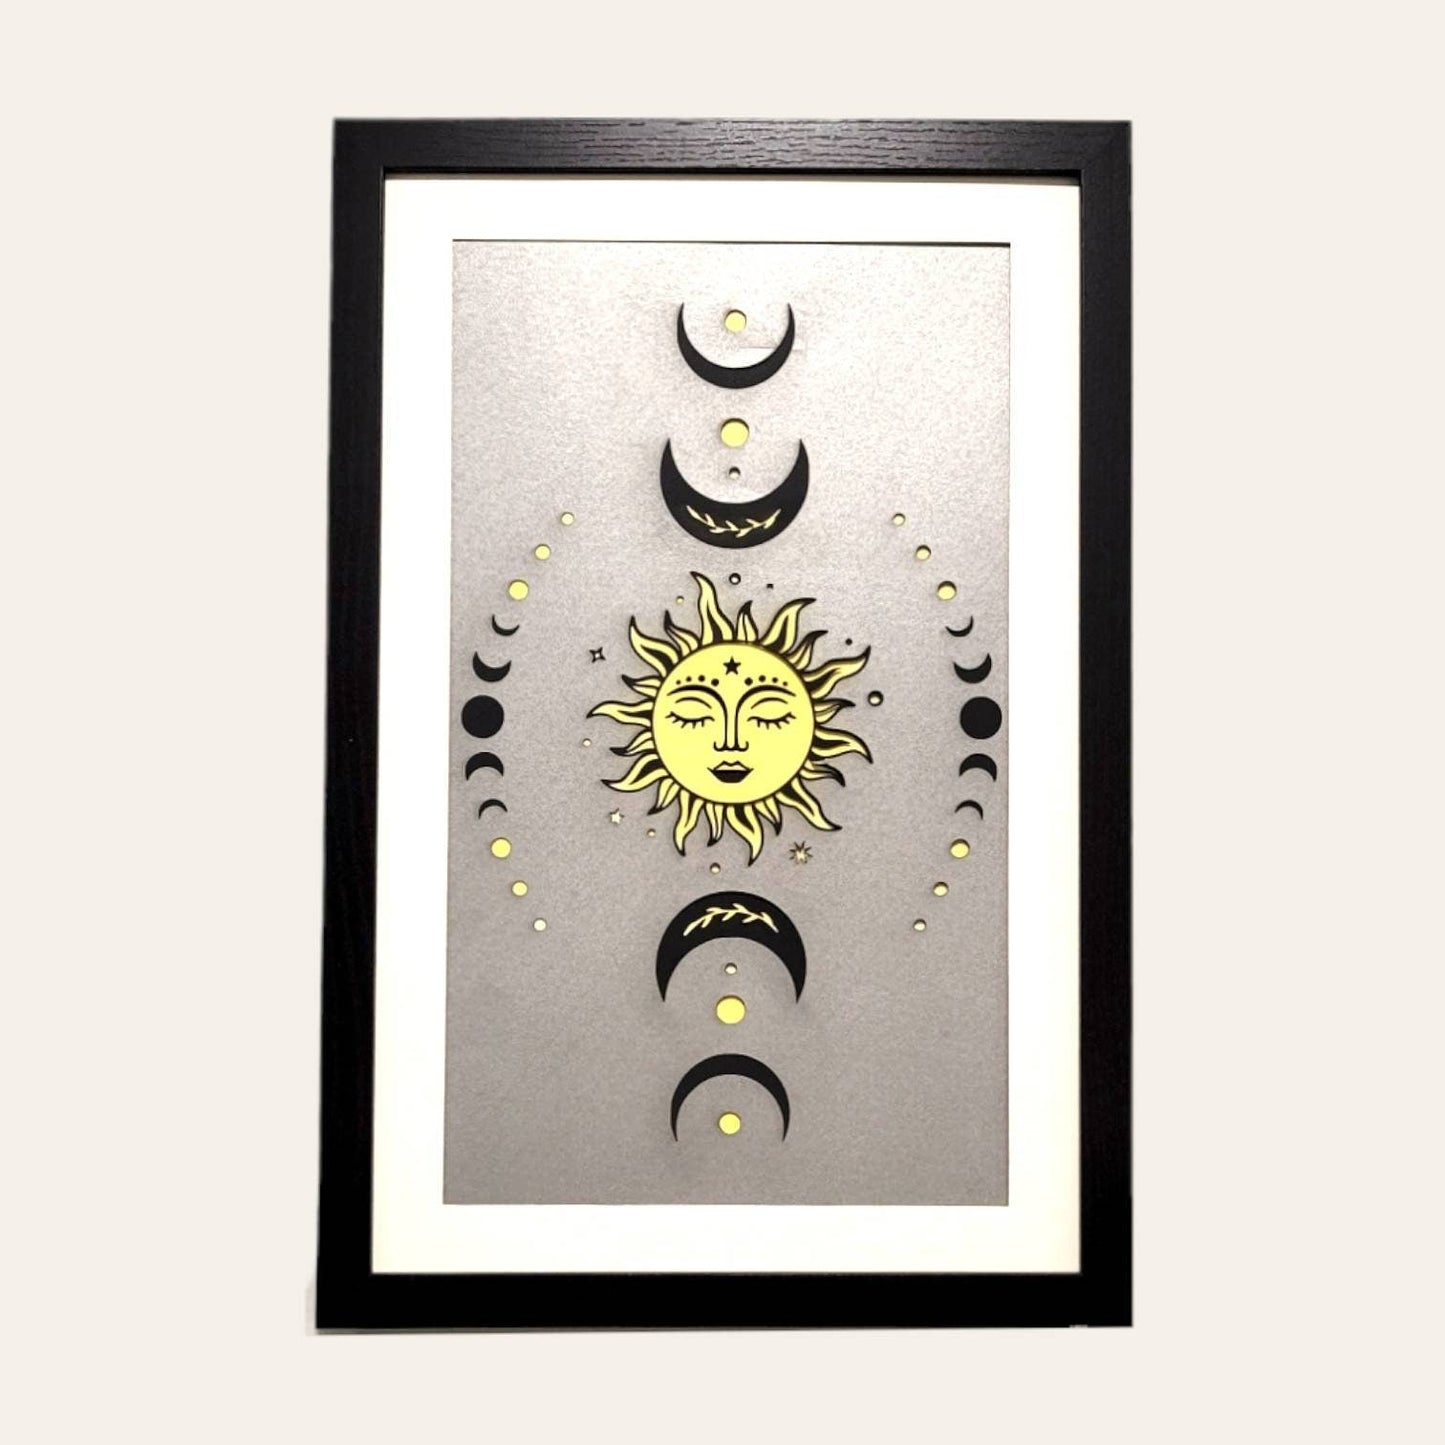 Framed Personalized Framed Celestial Wall Art | Jones Laser Craft Personalized Gift